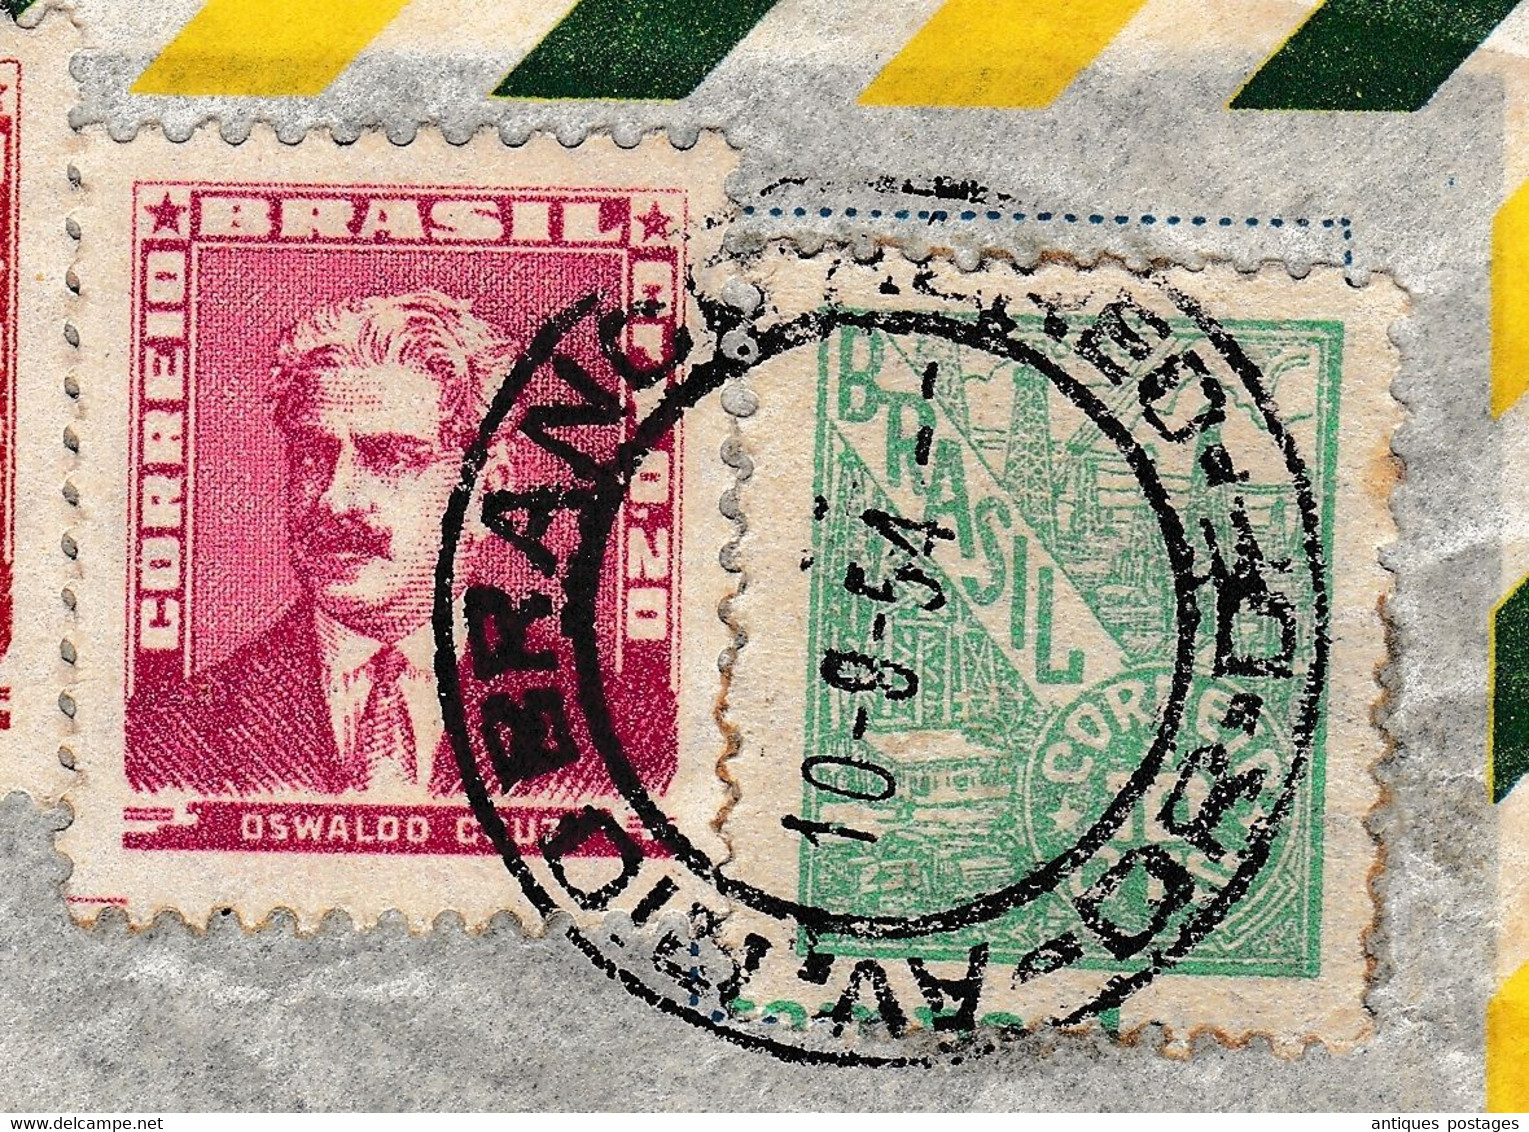 Lettre 1954 Brésil Rio Branco Oran Nemours Algérie Algéria Registrada Brasil Brazil - Lettres & Documents